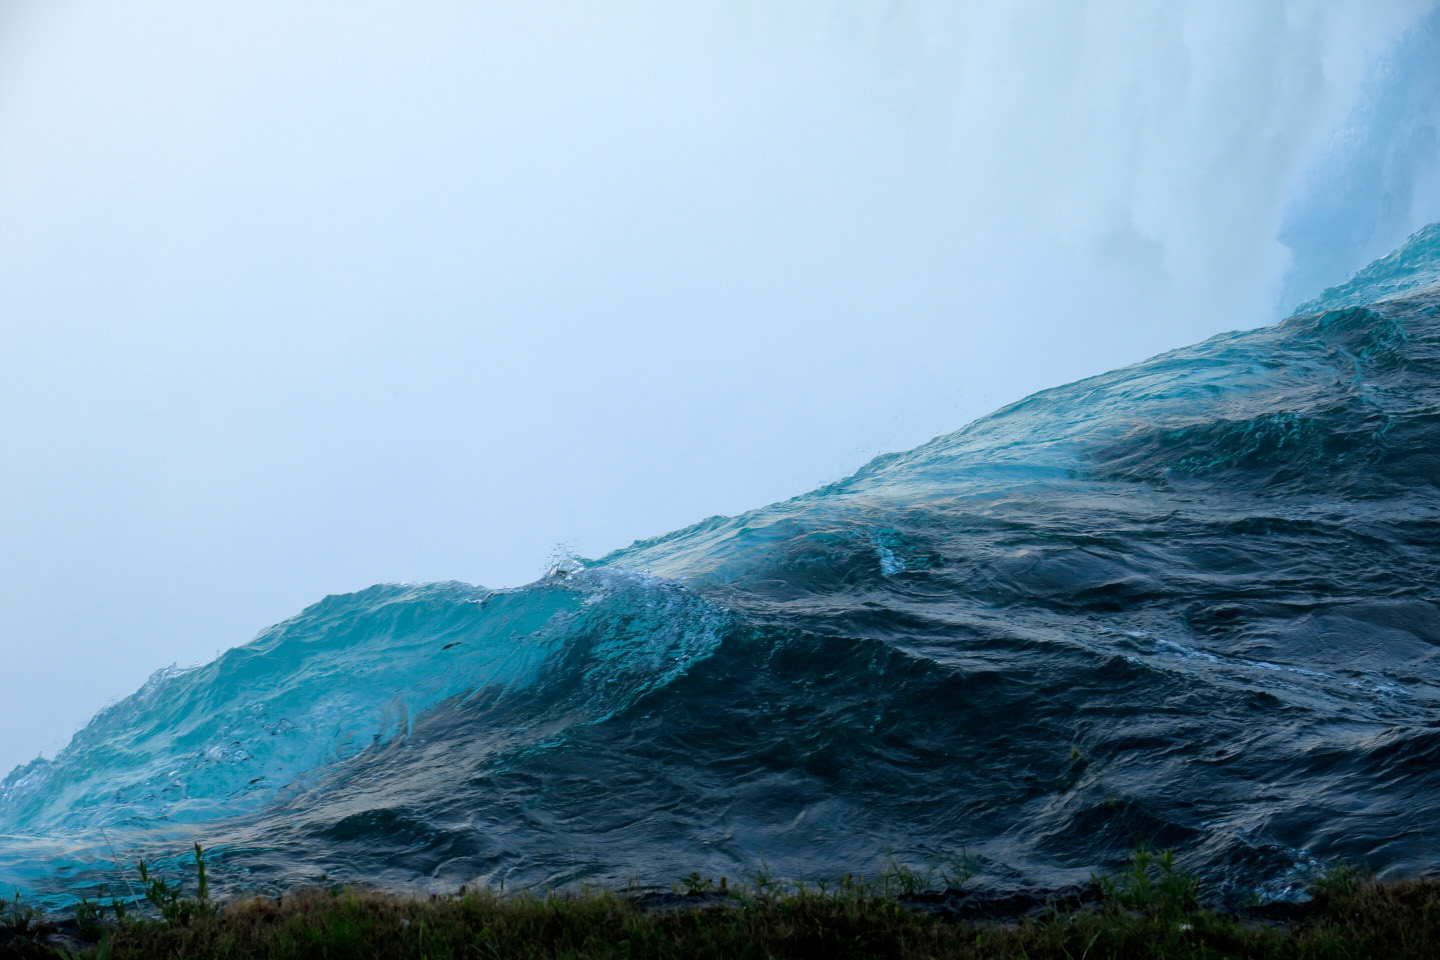 Niagara. Canon G3 X, raw file via DPP. ~150mm equiv. ISO 125, f/5, 1/800. Niagara Falls, CA. August, 2015.